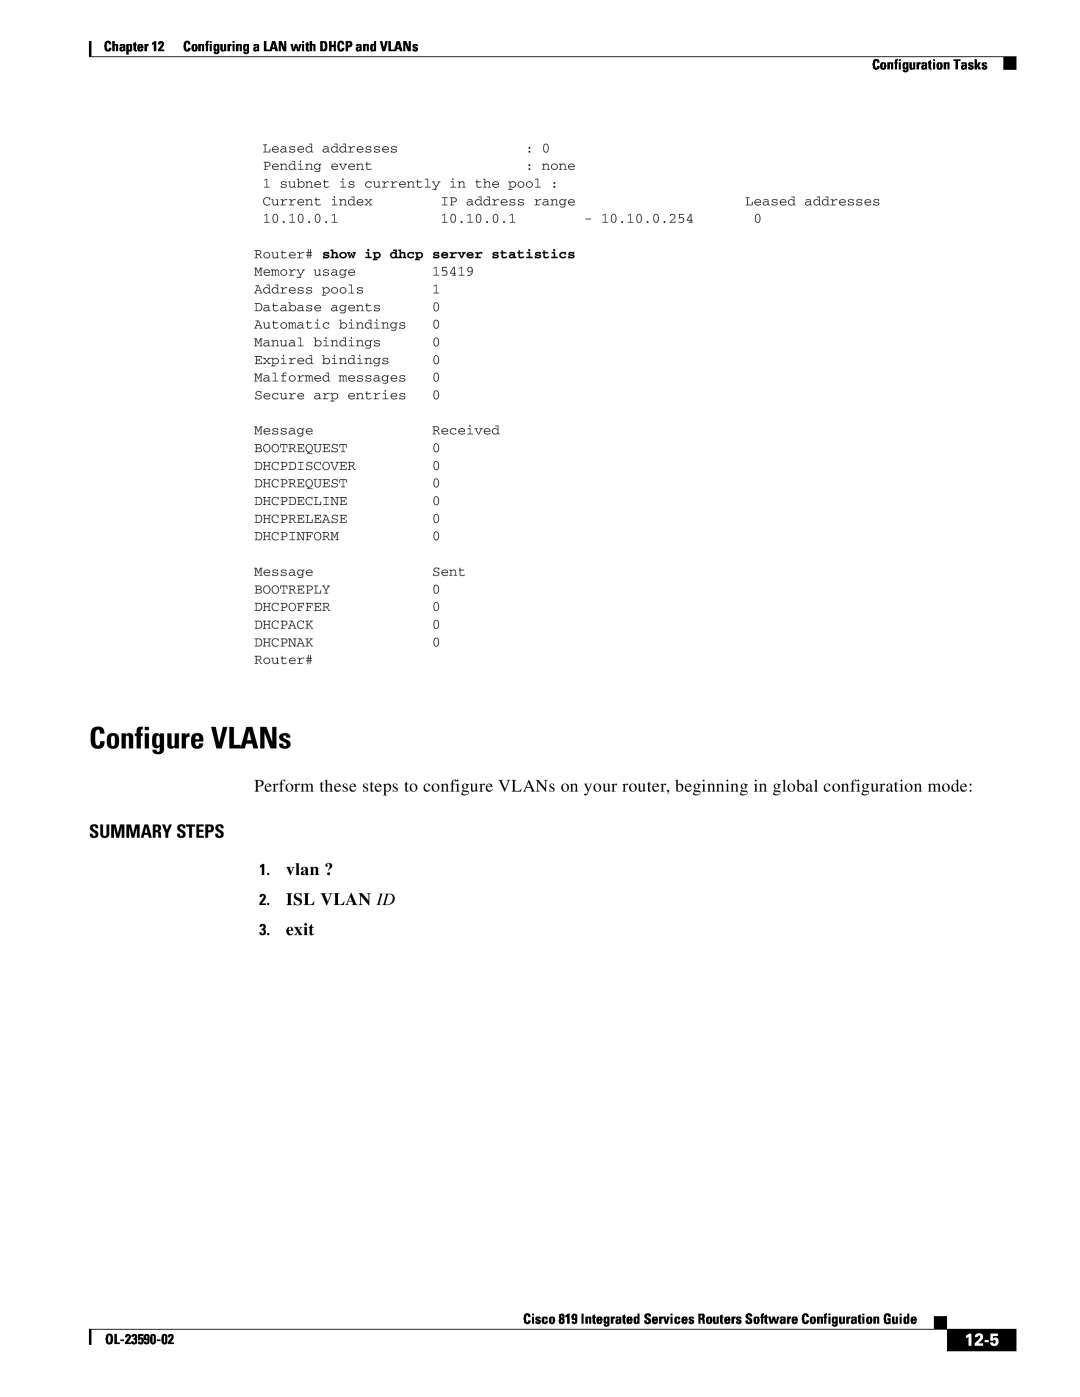 Cisco Systems C819HG4GVK9, C819GUK9 manual Configure VLANs, vlan ? 2. ISL VLAN ID 3. exit, 12-5, Summary Steps, OL-23590-02 